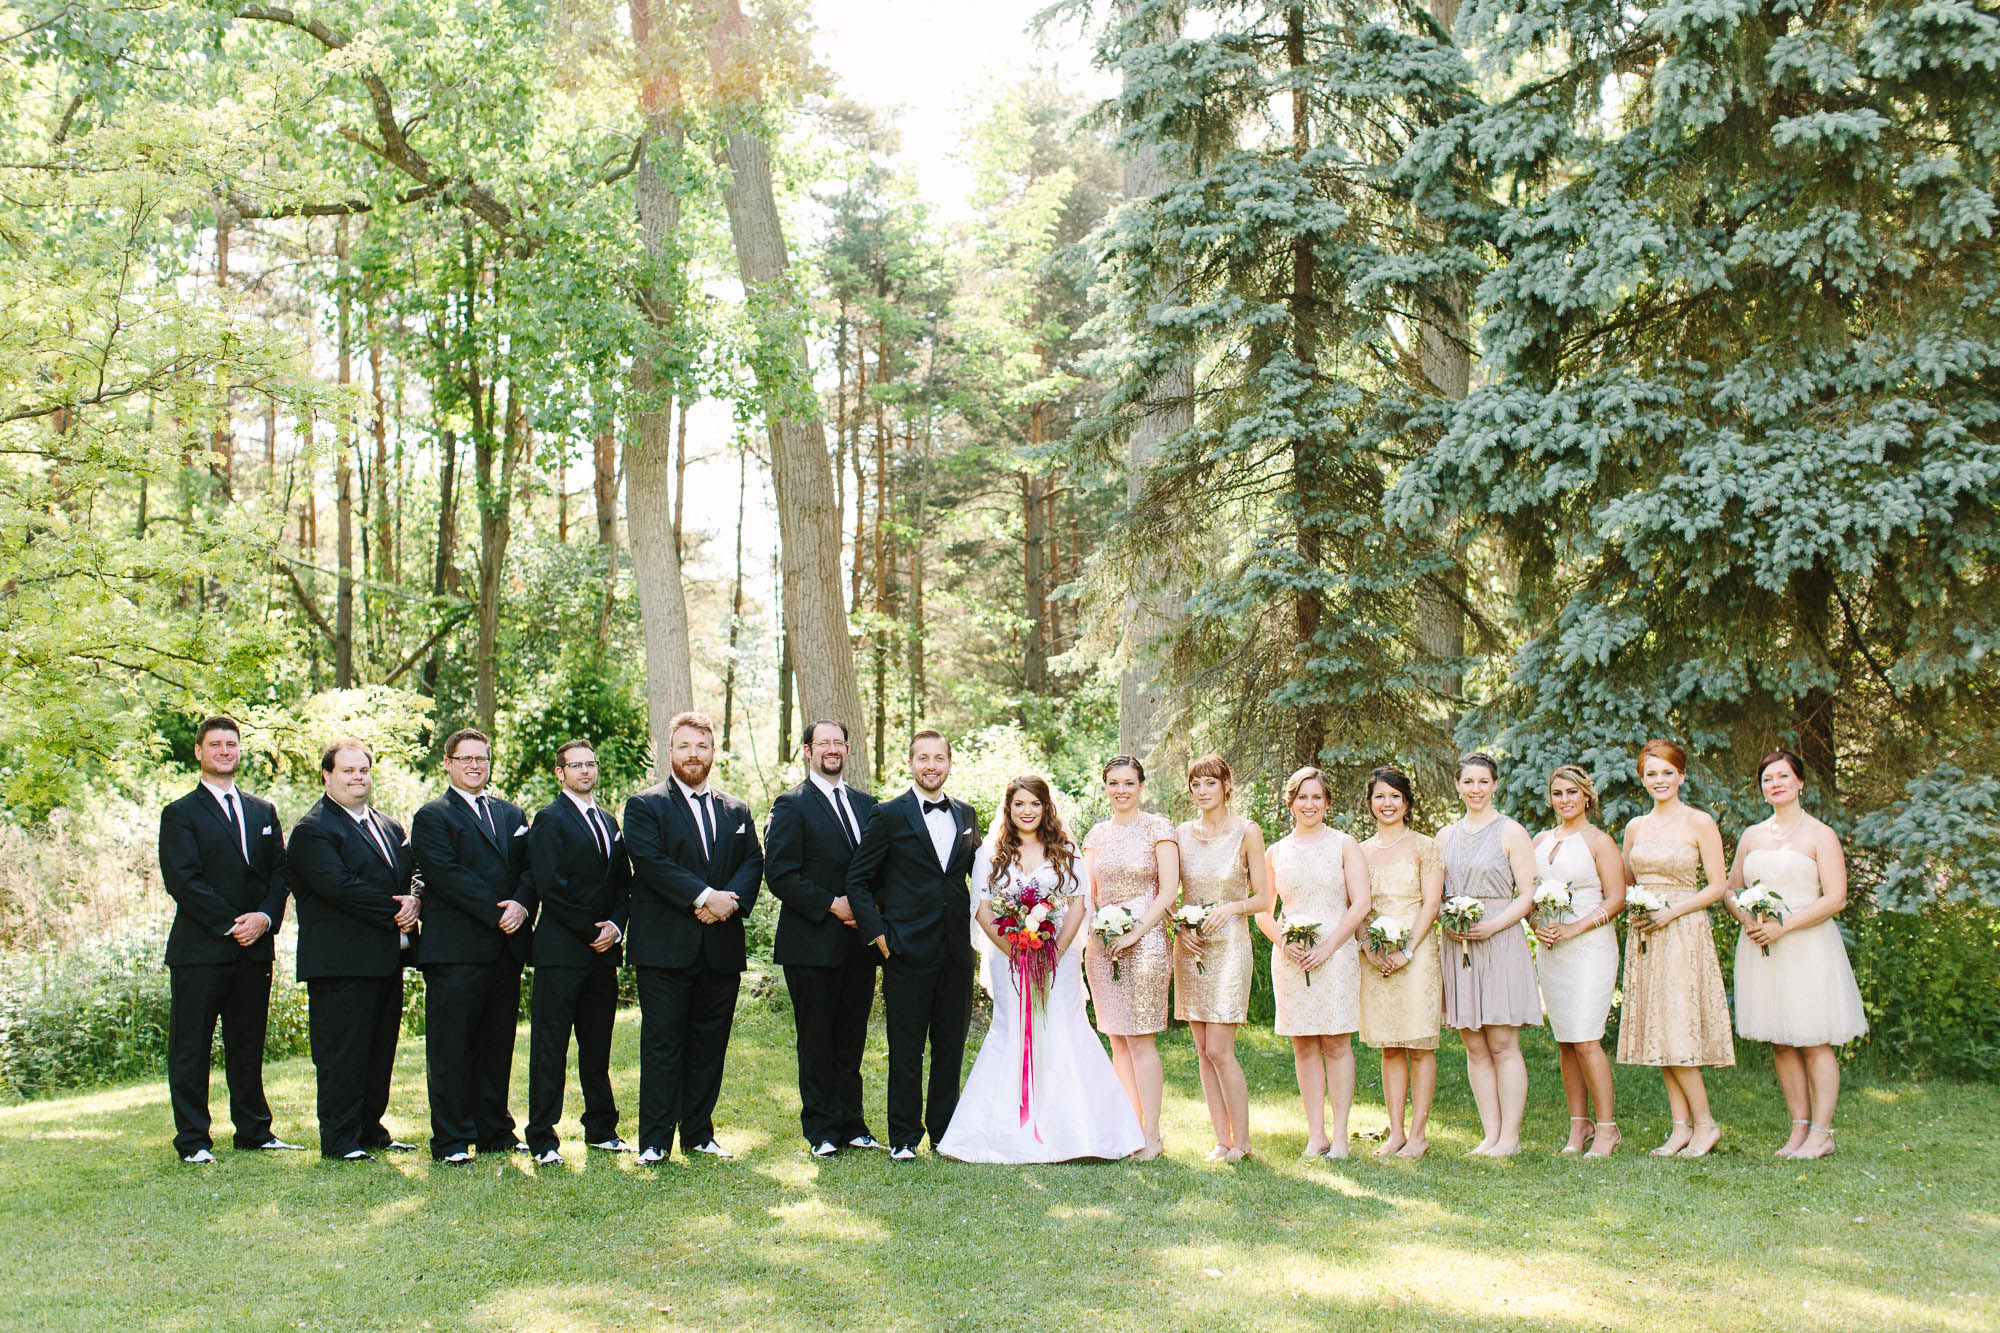 www-marycostaphotography-com-buffalo-ny-wedding-056